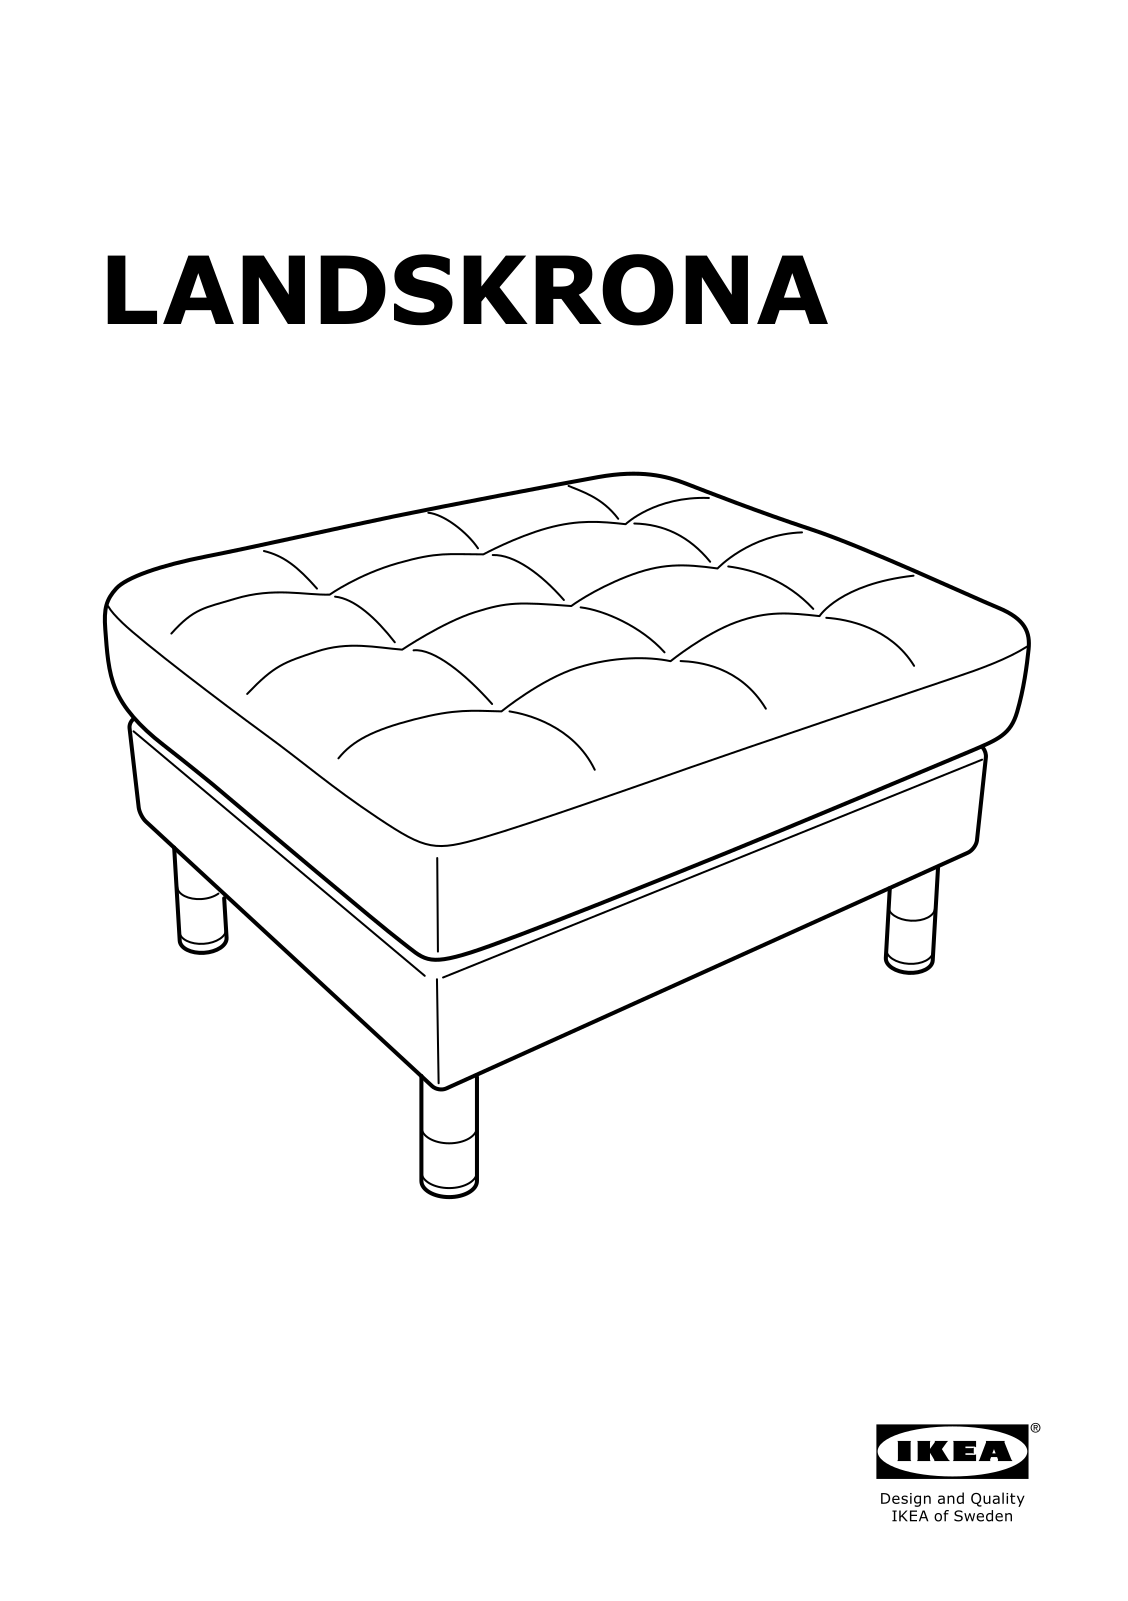 IKEA LANDSKRONA User Manual